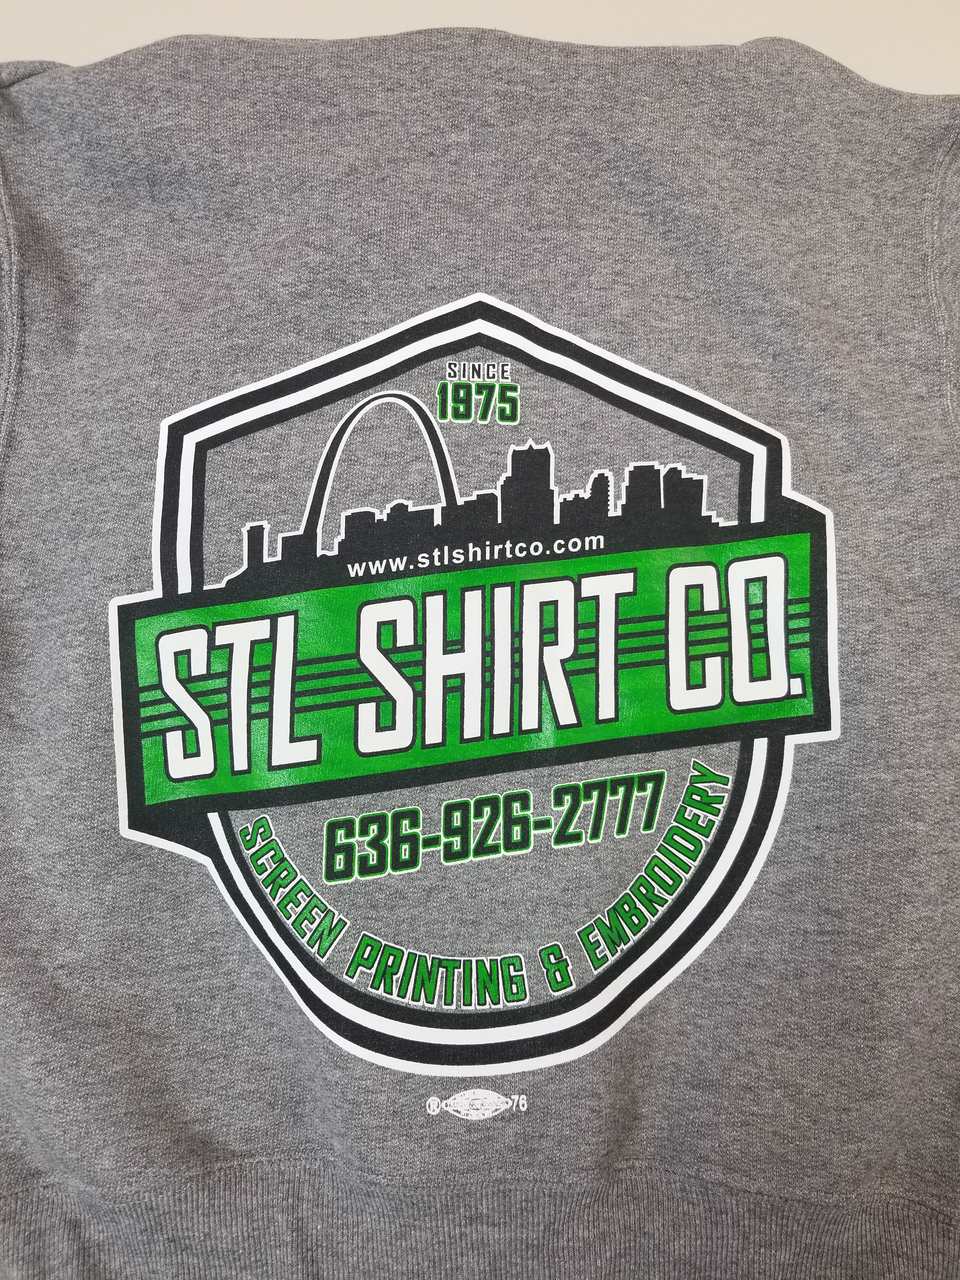 Rush T-Shirt Orders Miami, FL | Custom T-Shirts | STL Shirt Co.